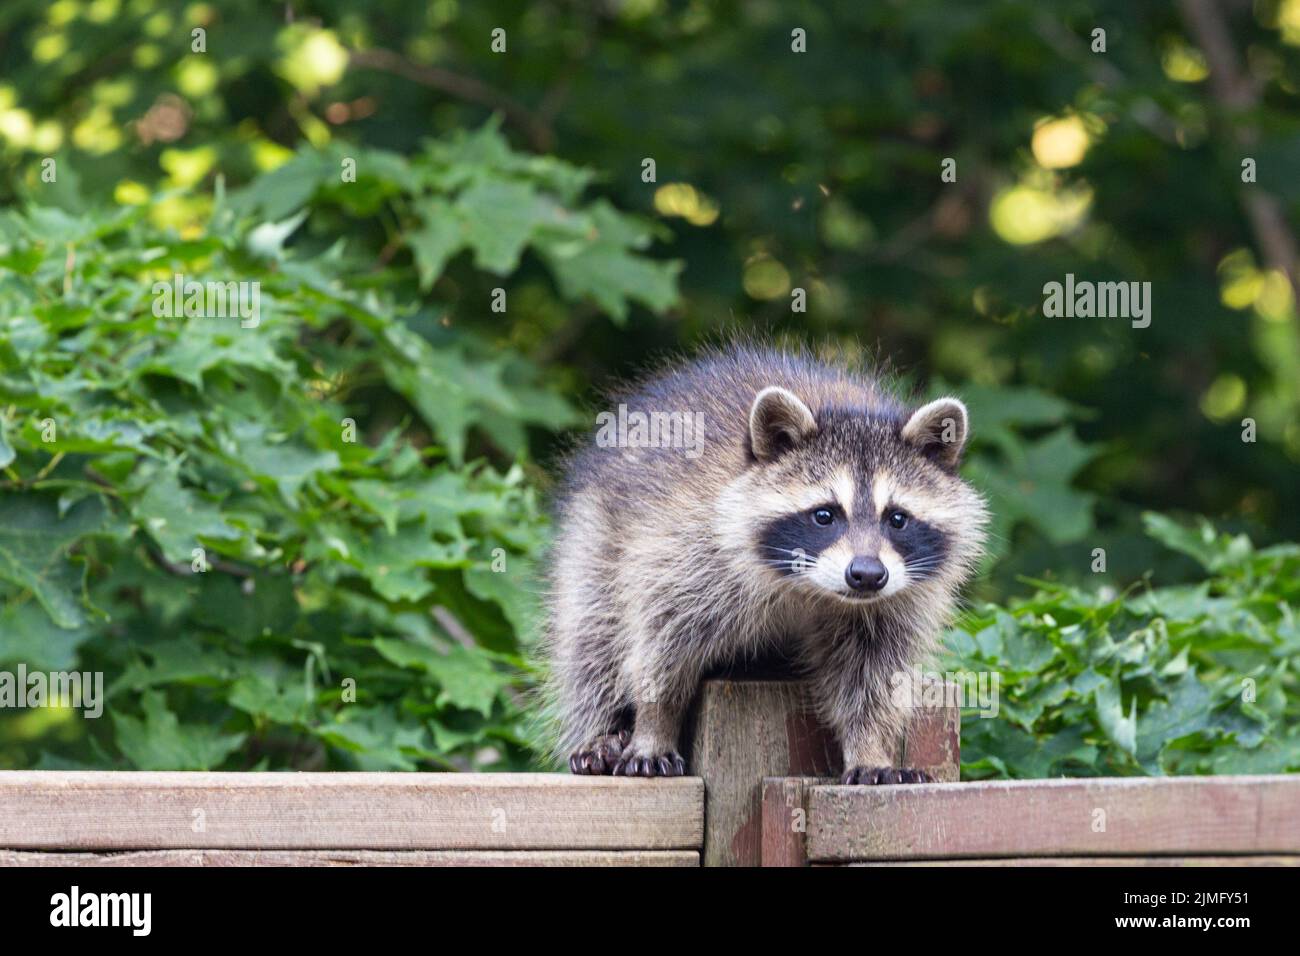 Baby raccoon climbing over wooden deck railing. Stock Photo